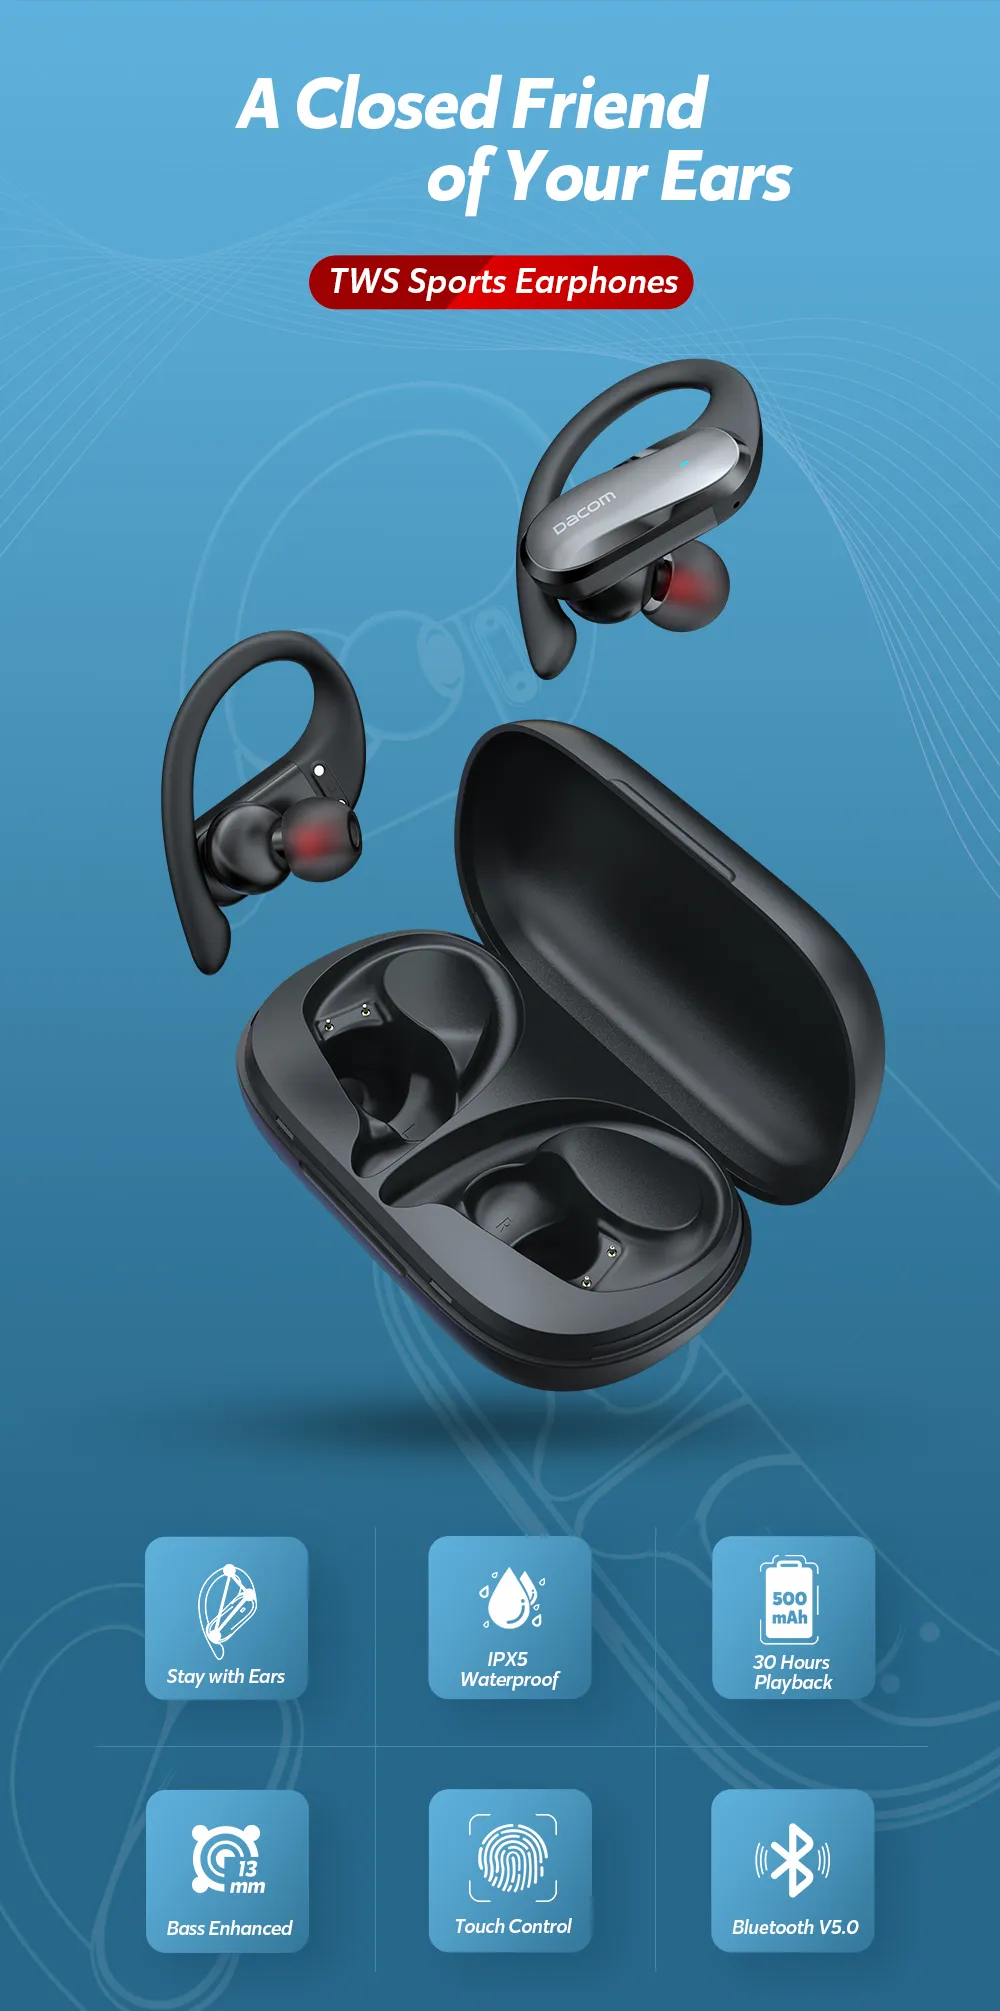 Dacom-auriculares Deportivos Inalámbricos Con Bluetooth